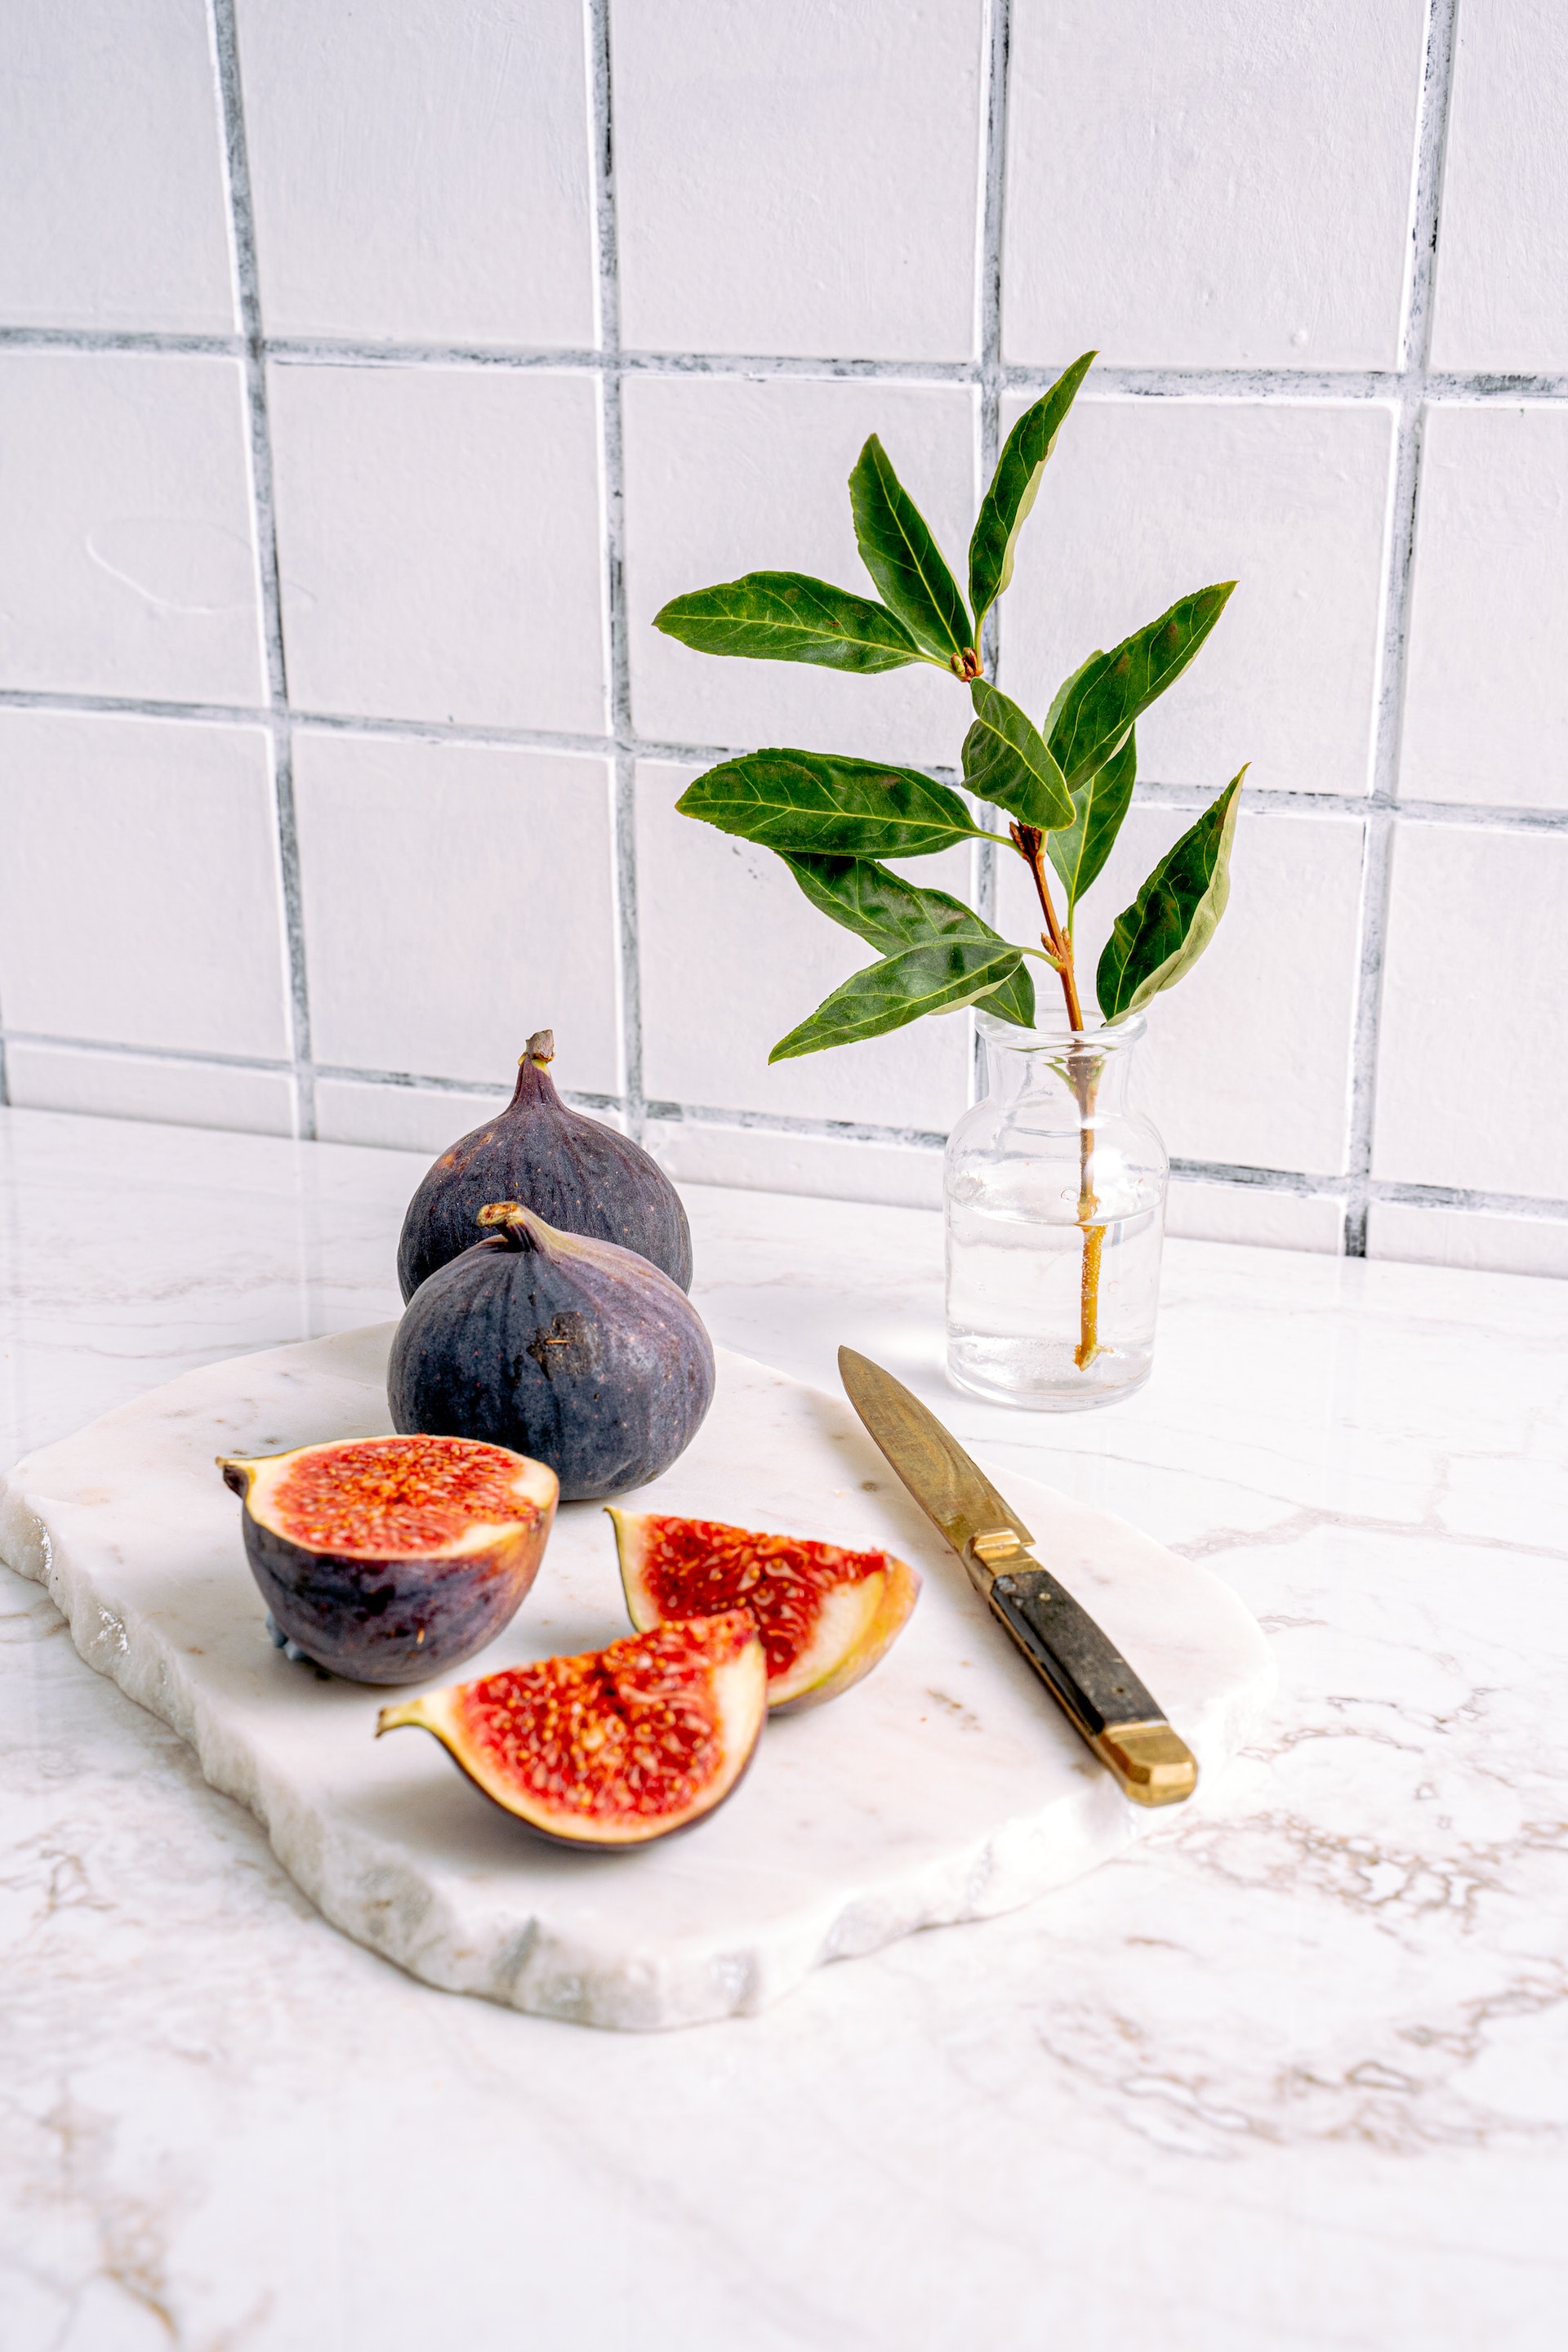 Figs on a cutting board